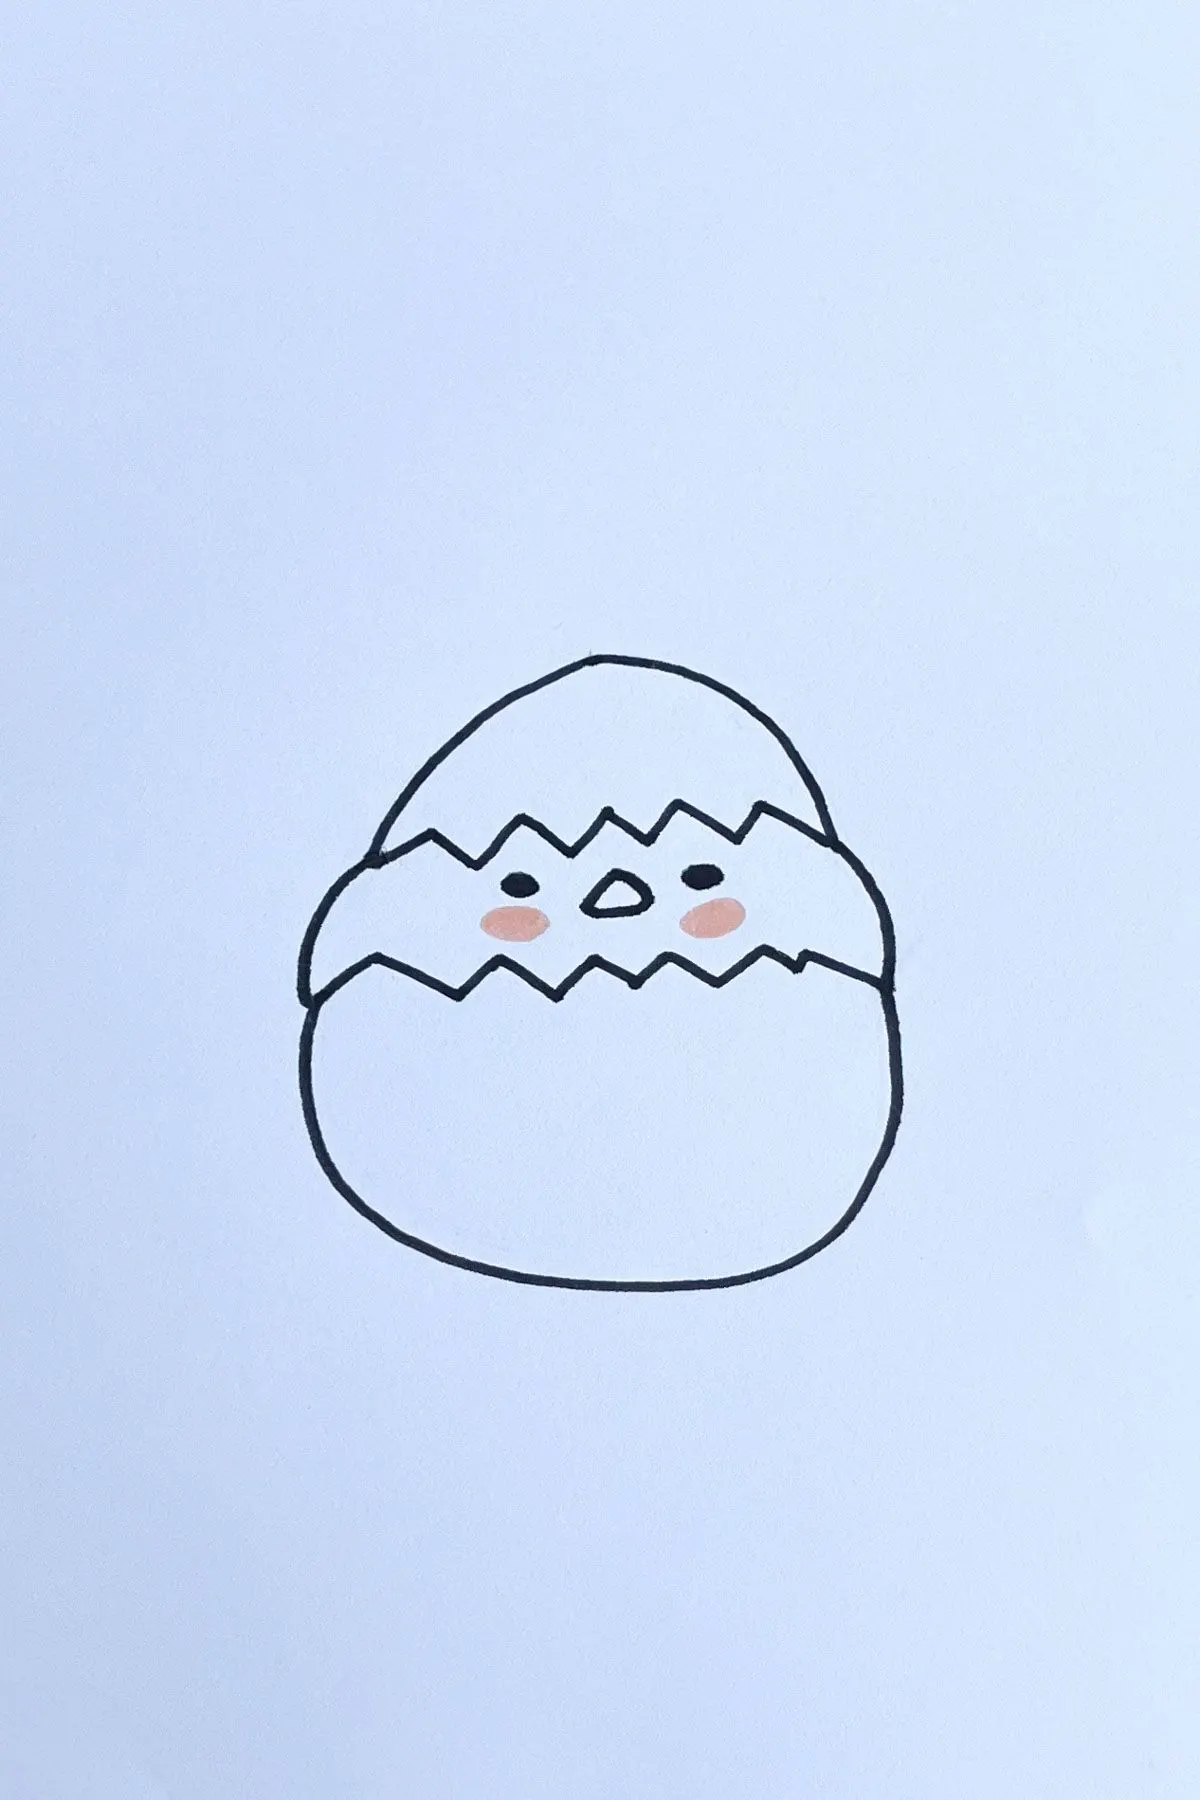 cracking egg anime drawing